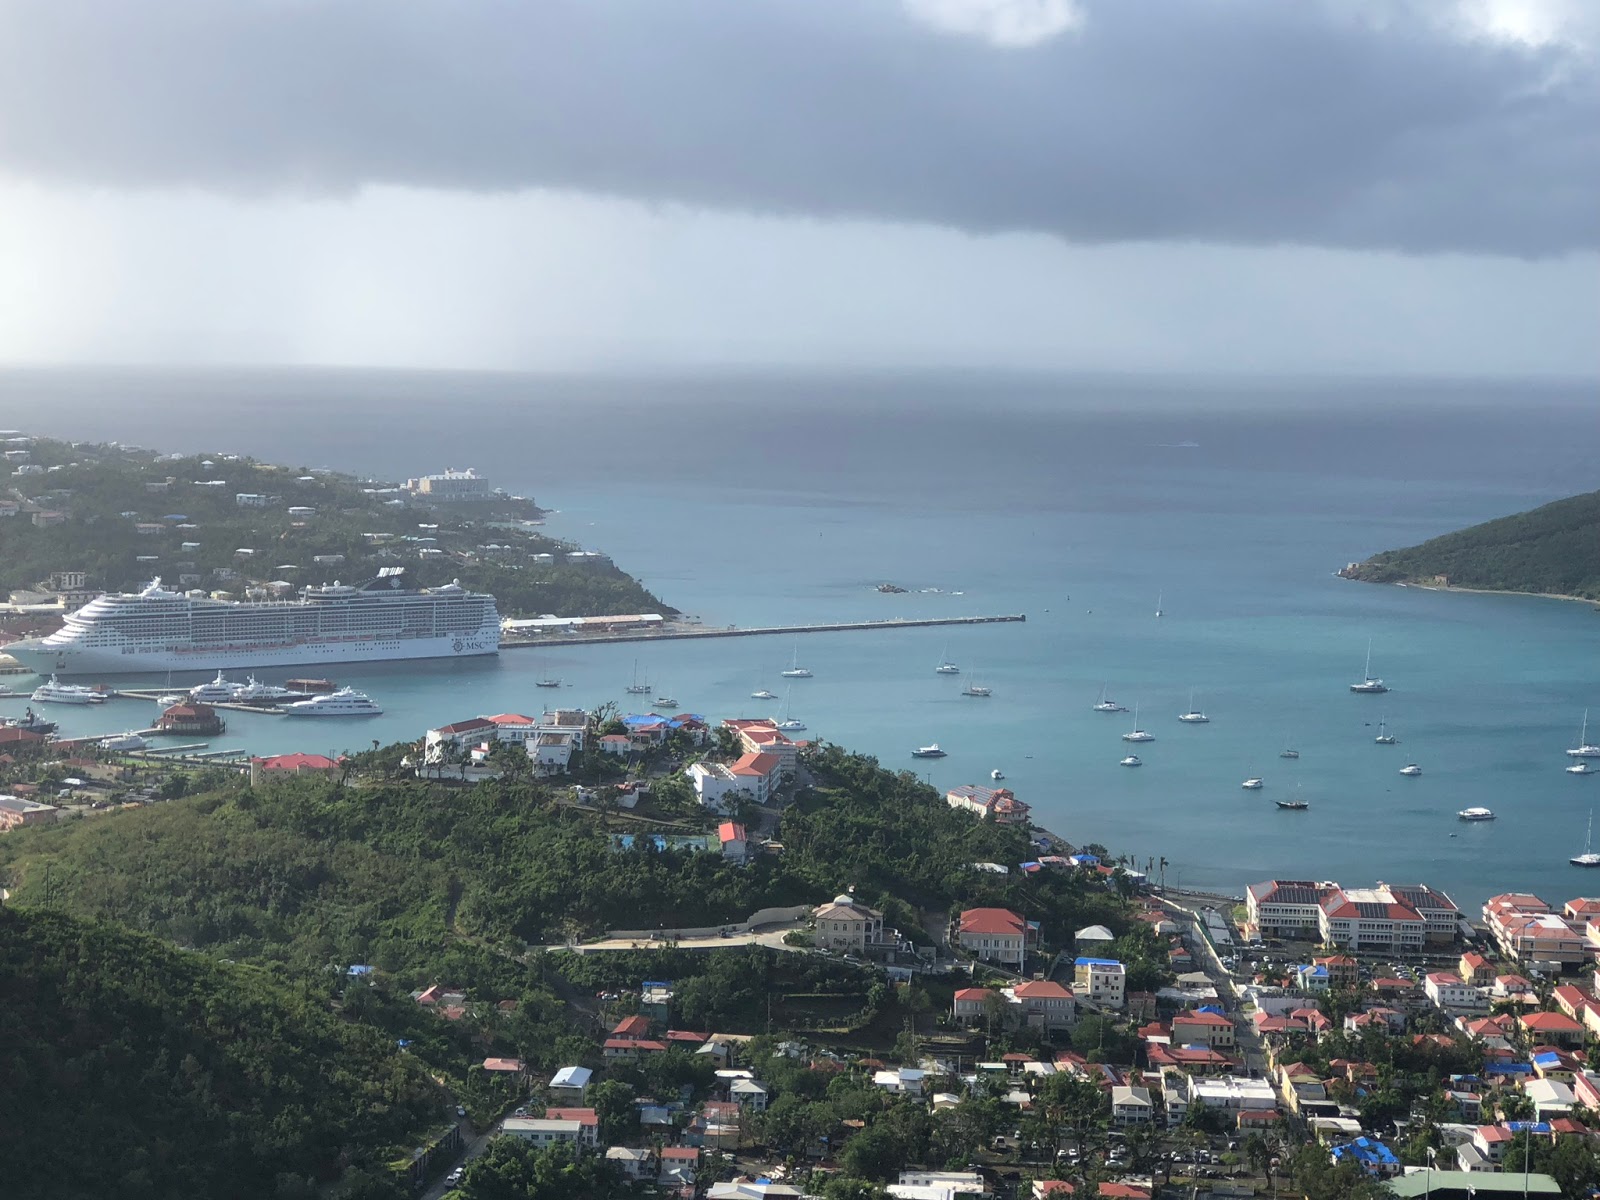 #Vlog2 Cruzeiro no Caribe: desembarque na primeira ilha: St. Thomas